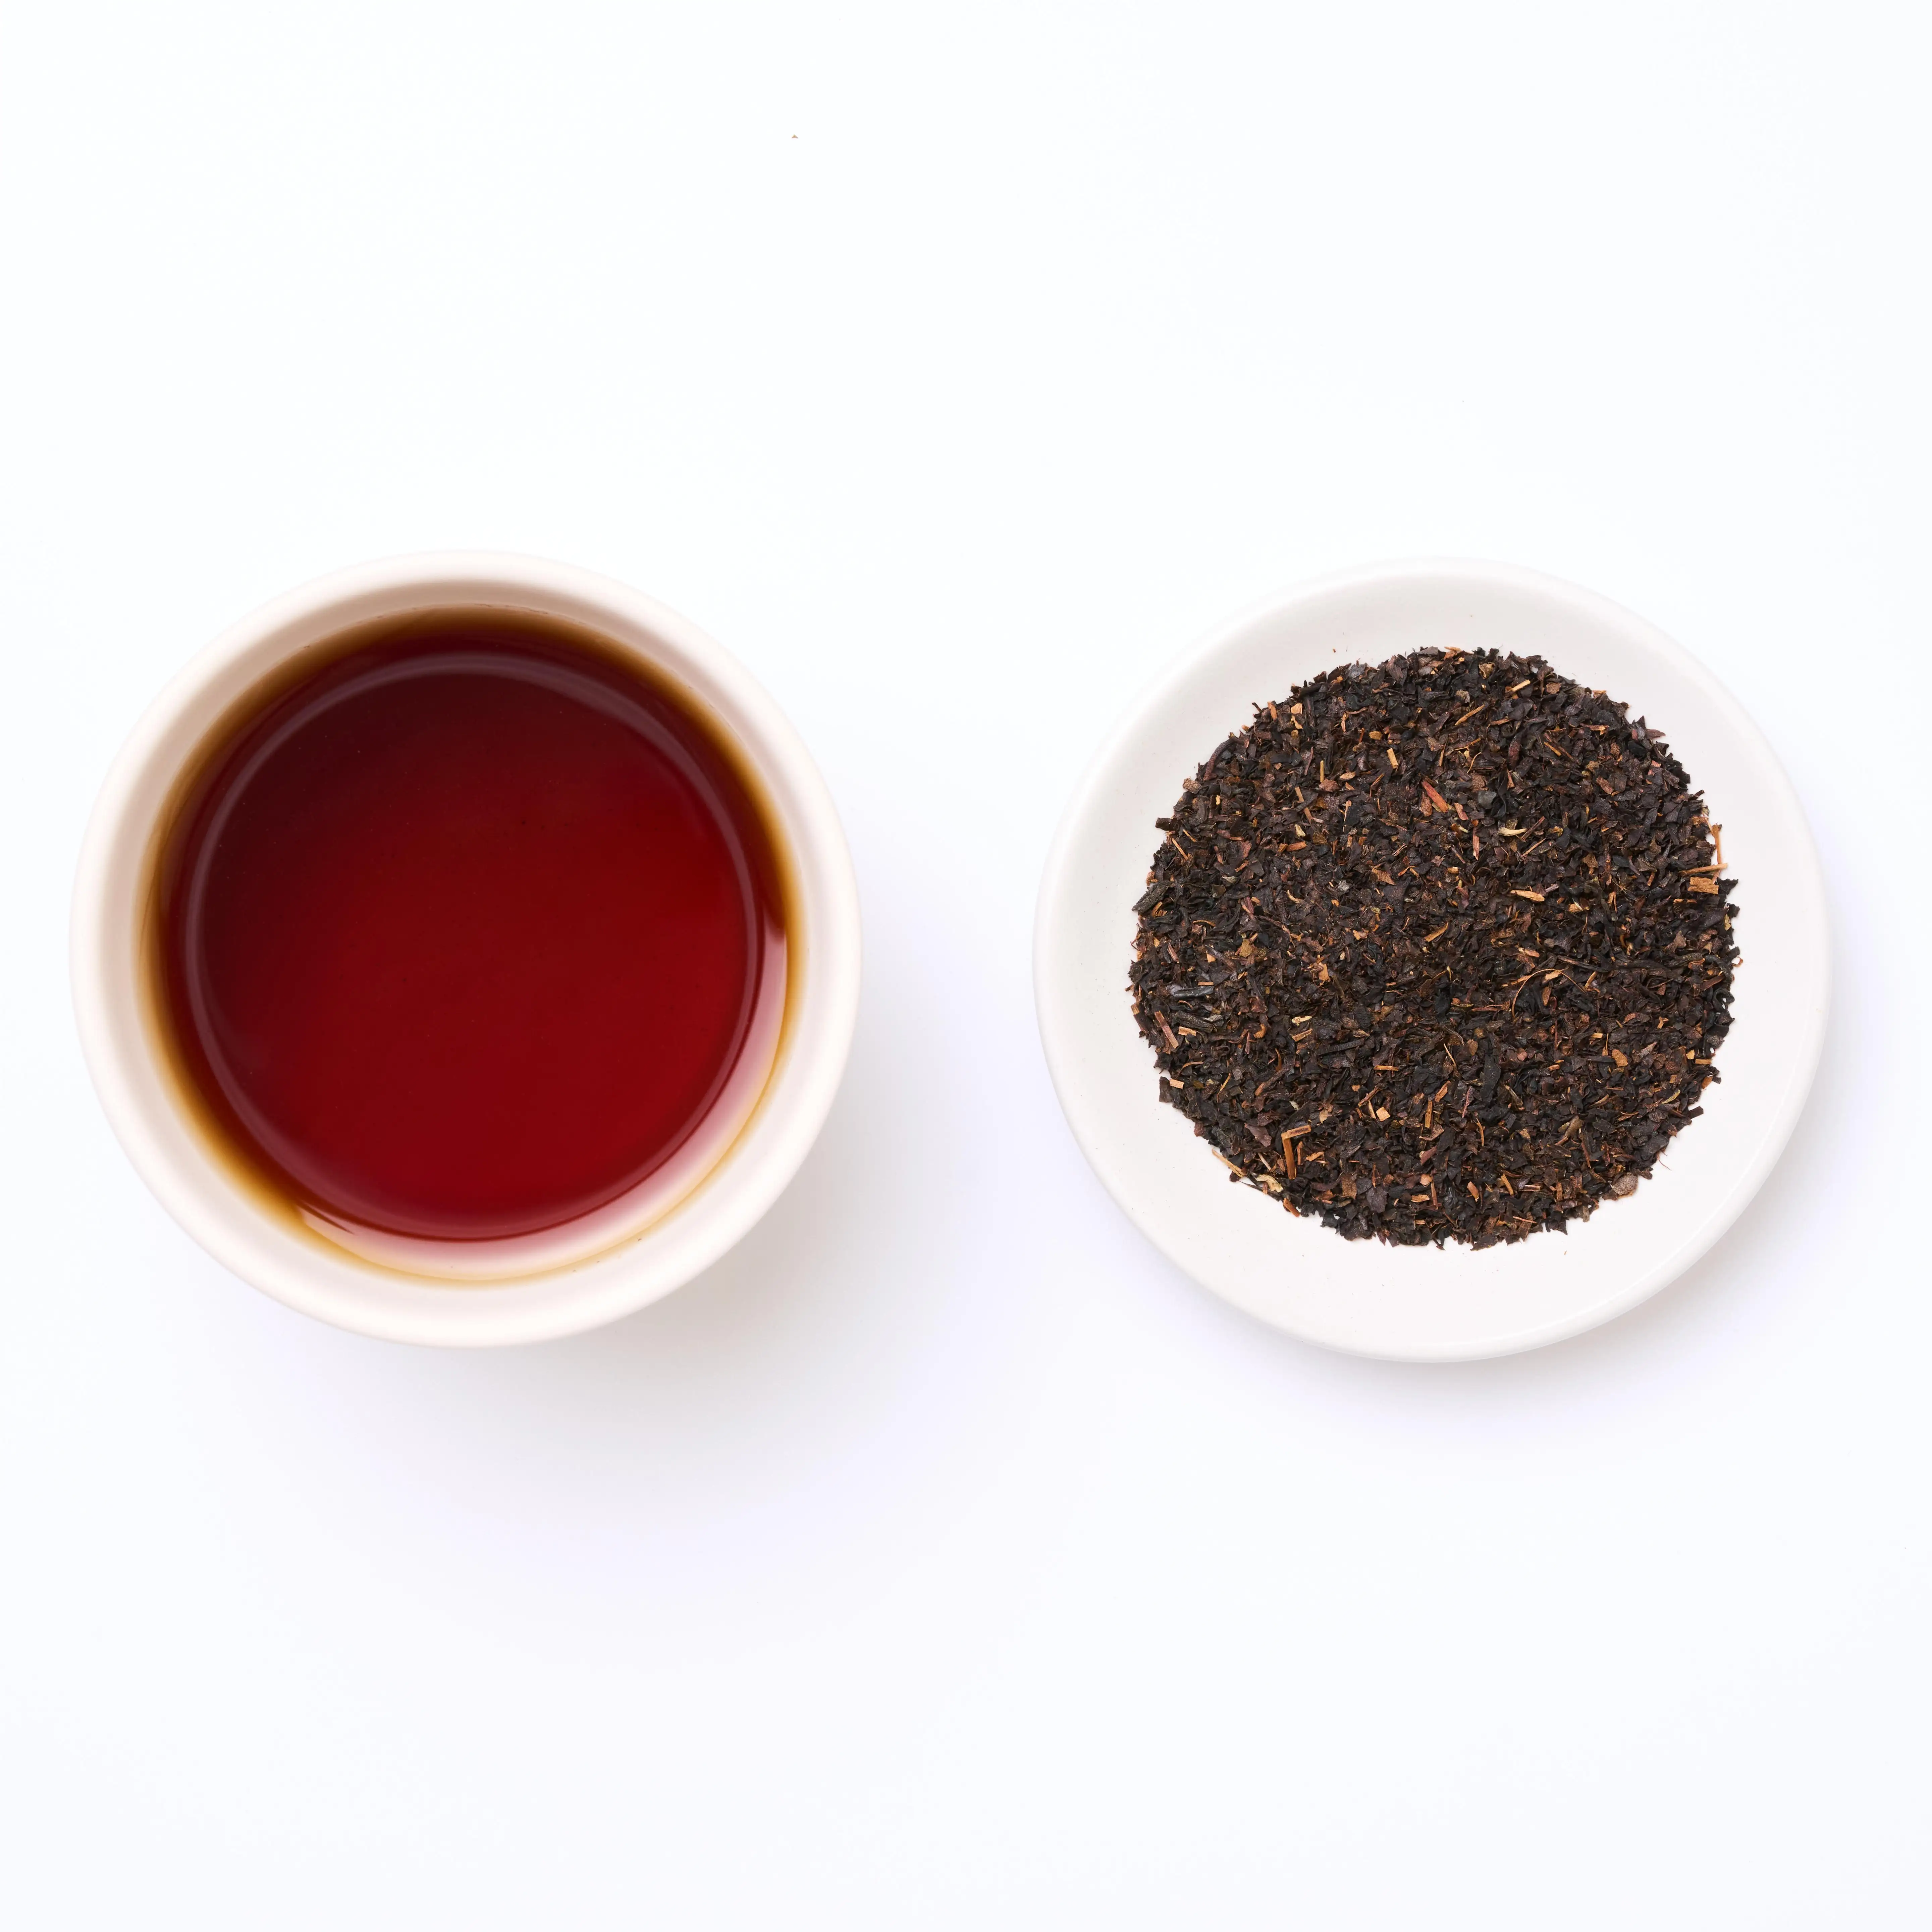 Hot Sales Lychee Black Tea- Bubble Tea Ingredient From Taiwan- Loose Tea Leaves